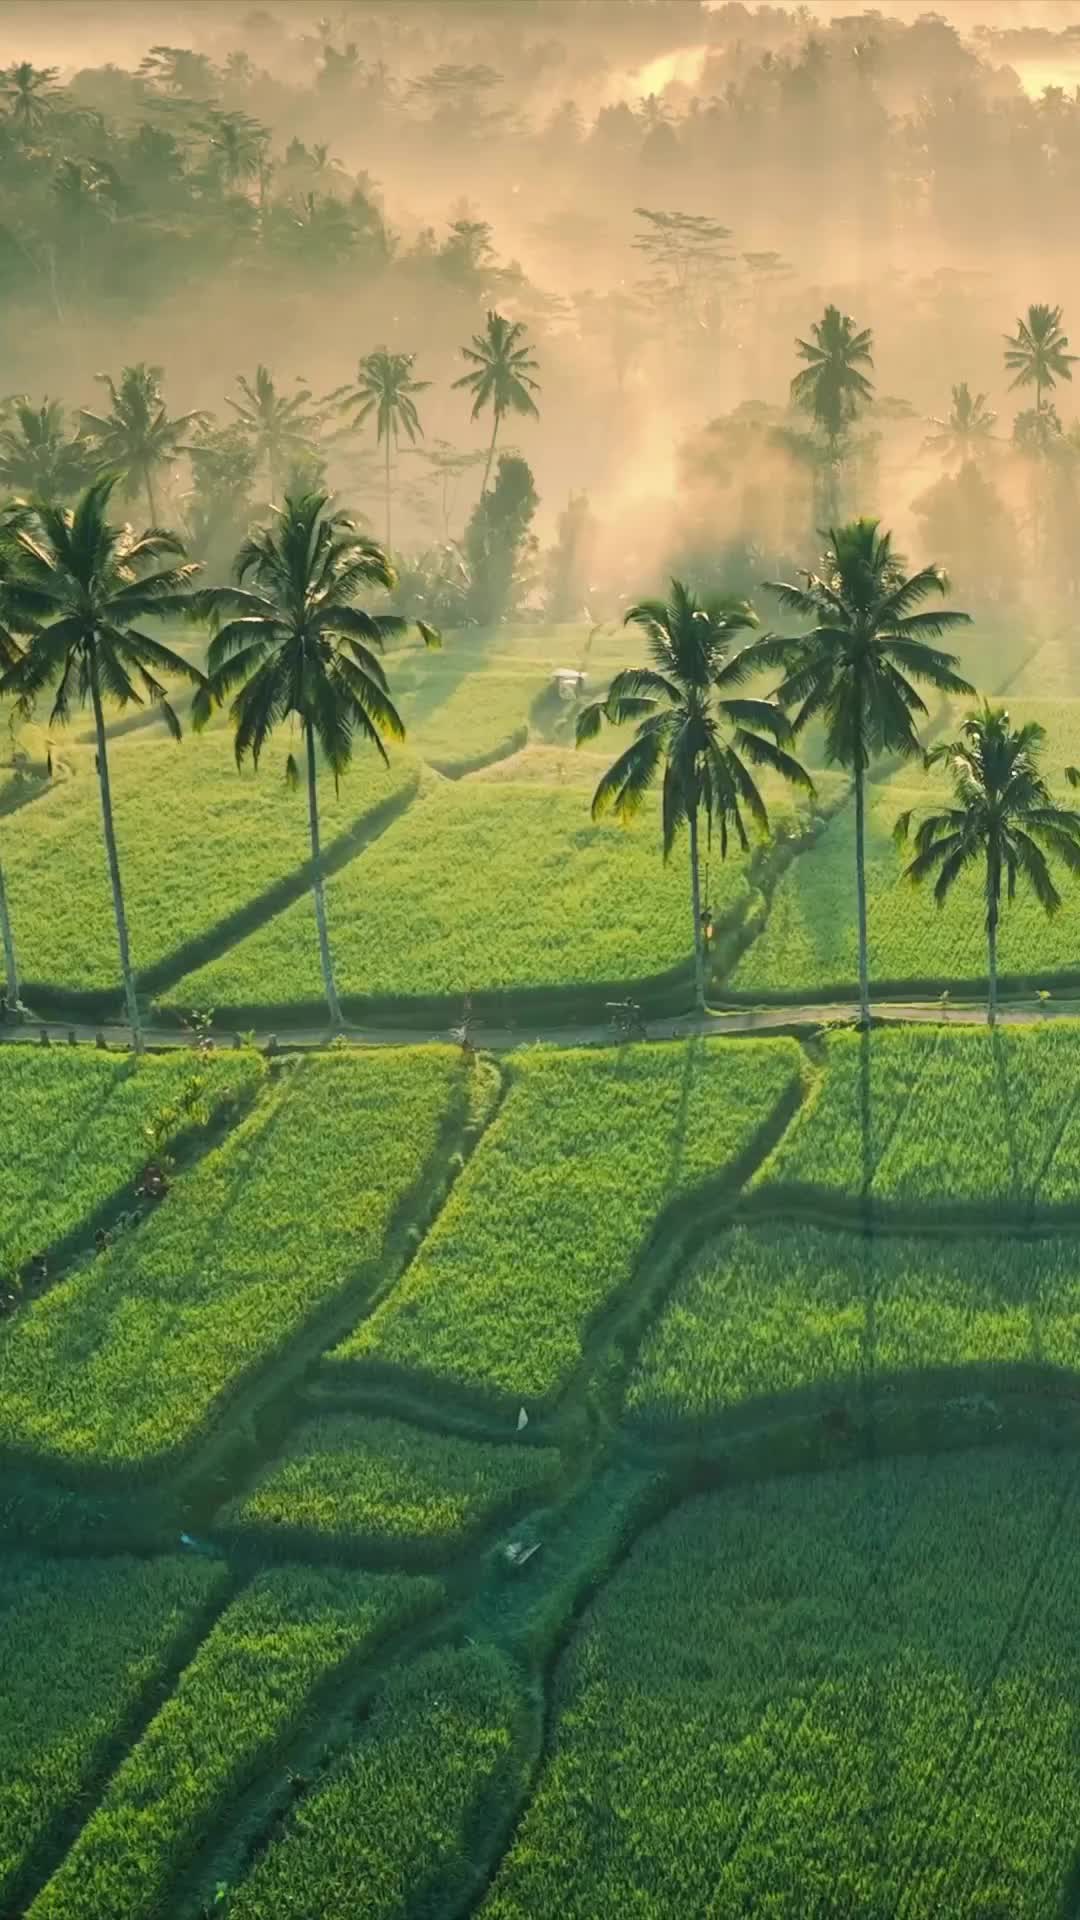 Discover the Serene Beauty of Ubud, Bali's Rice Fields